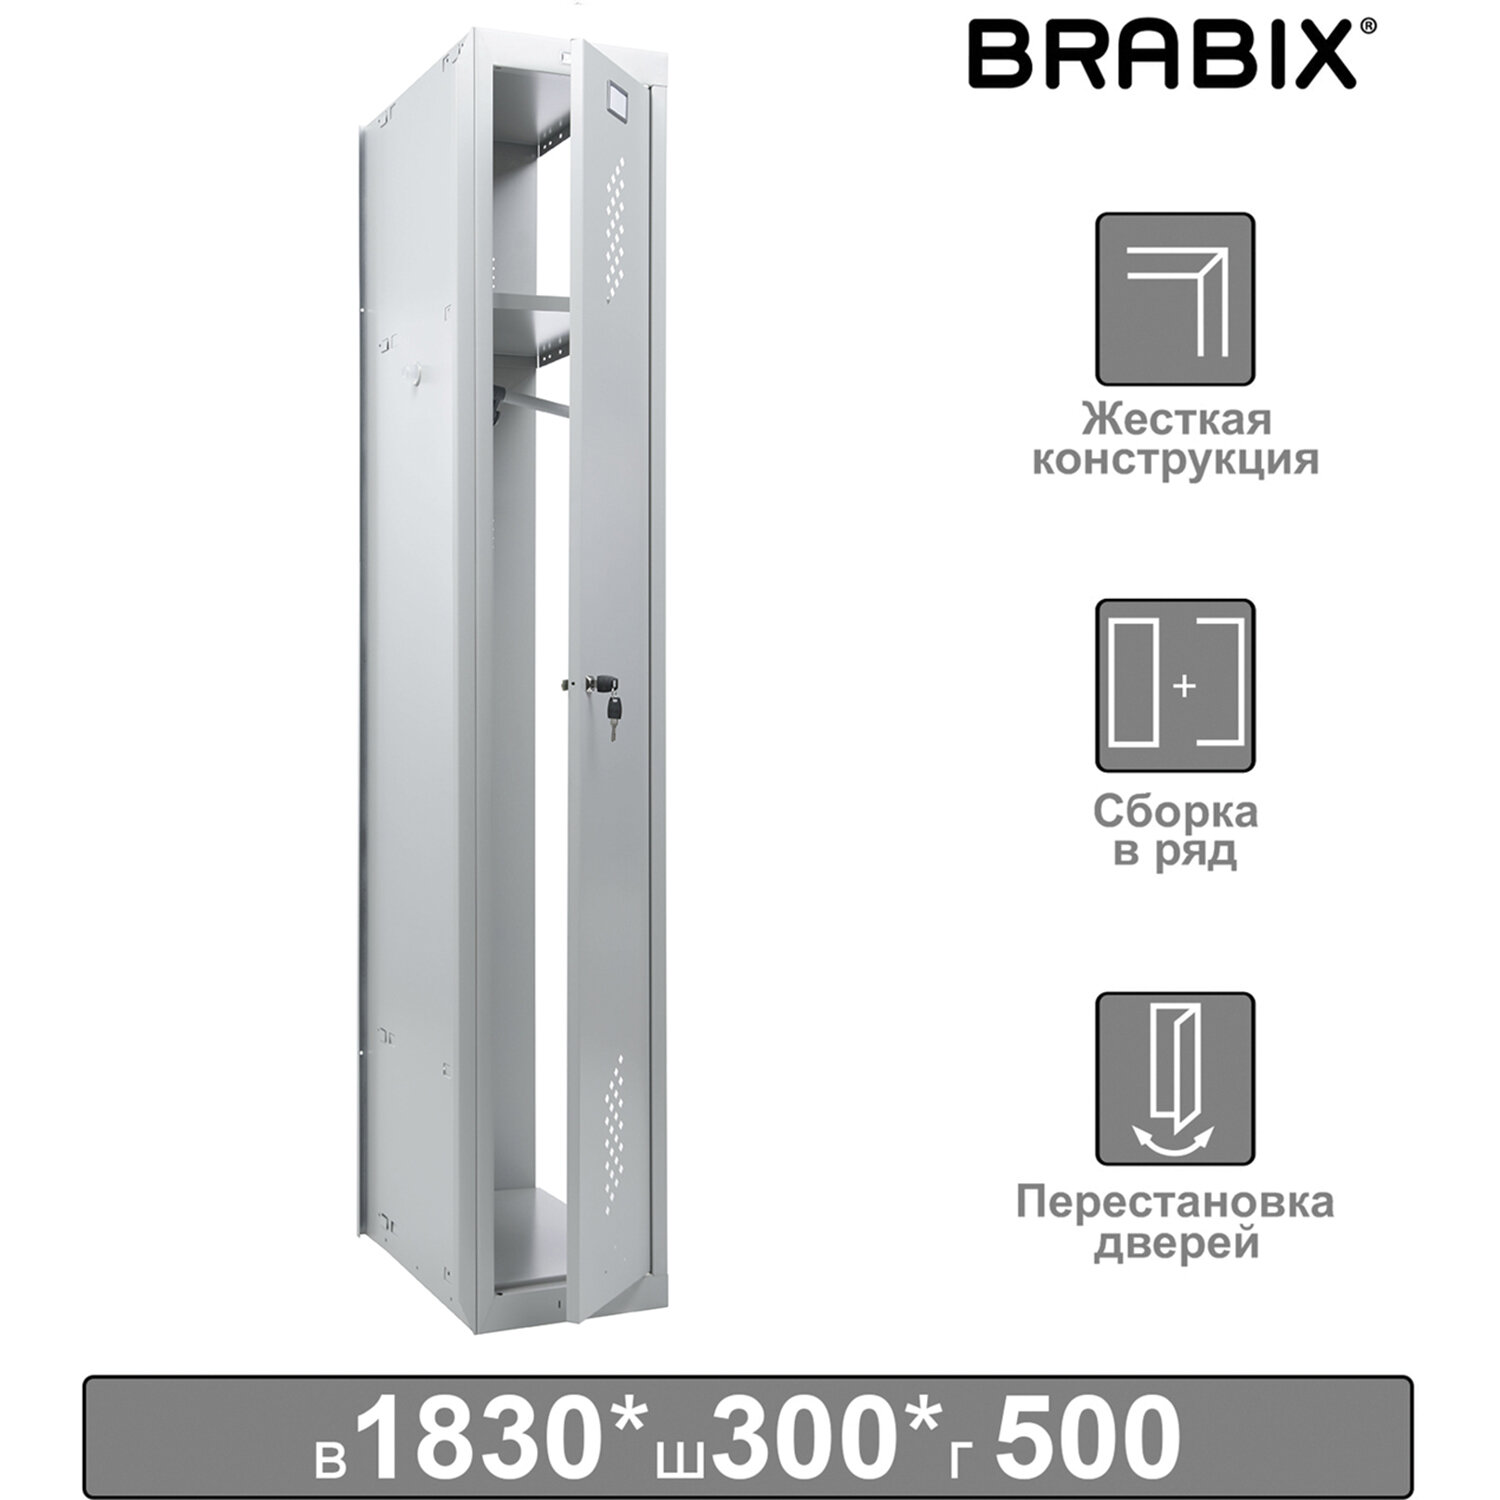 Brabix Шкаф (секция без стенки) металлический для одежды BRABIX LK 01-30, УСИЛЕННЫЙ, 1830х300х500 мм, 291128, S230BR402102